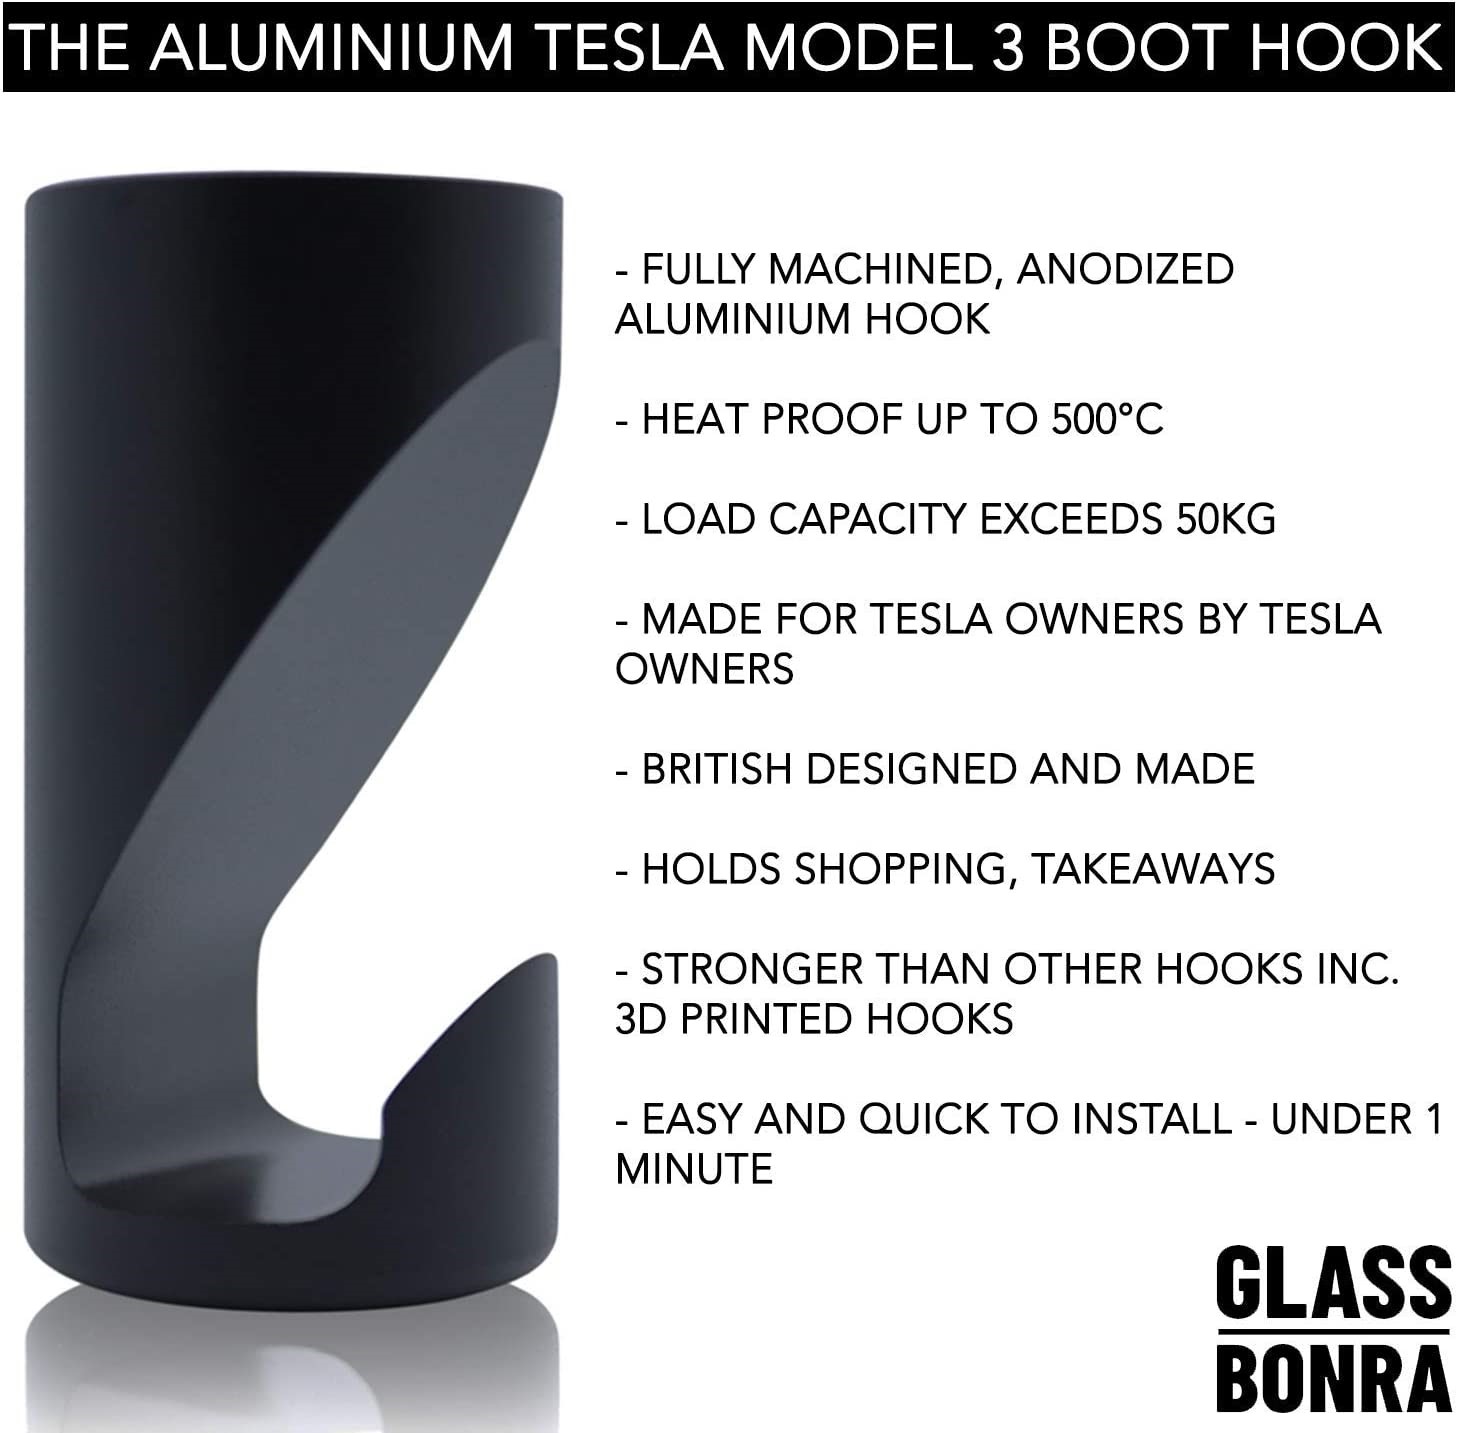 Glass Bonra unveils secret aluminium boot hooks specialised for Tesla Model 3 cars , Alcircle News